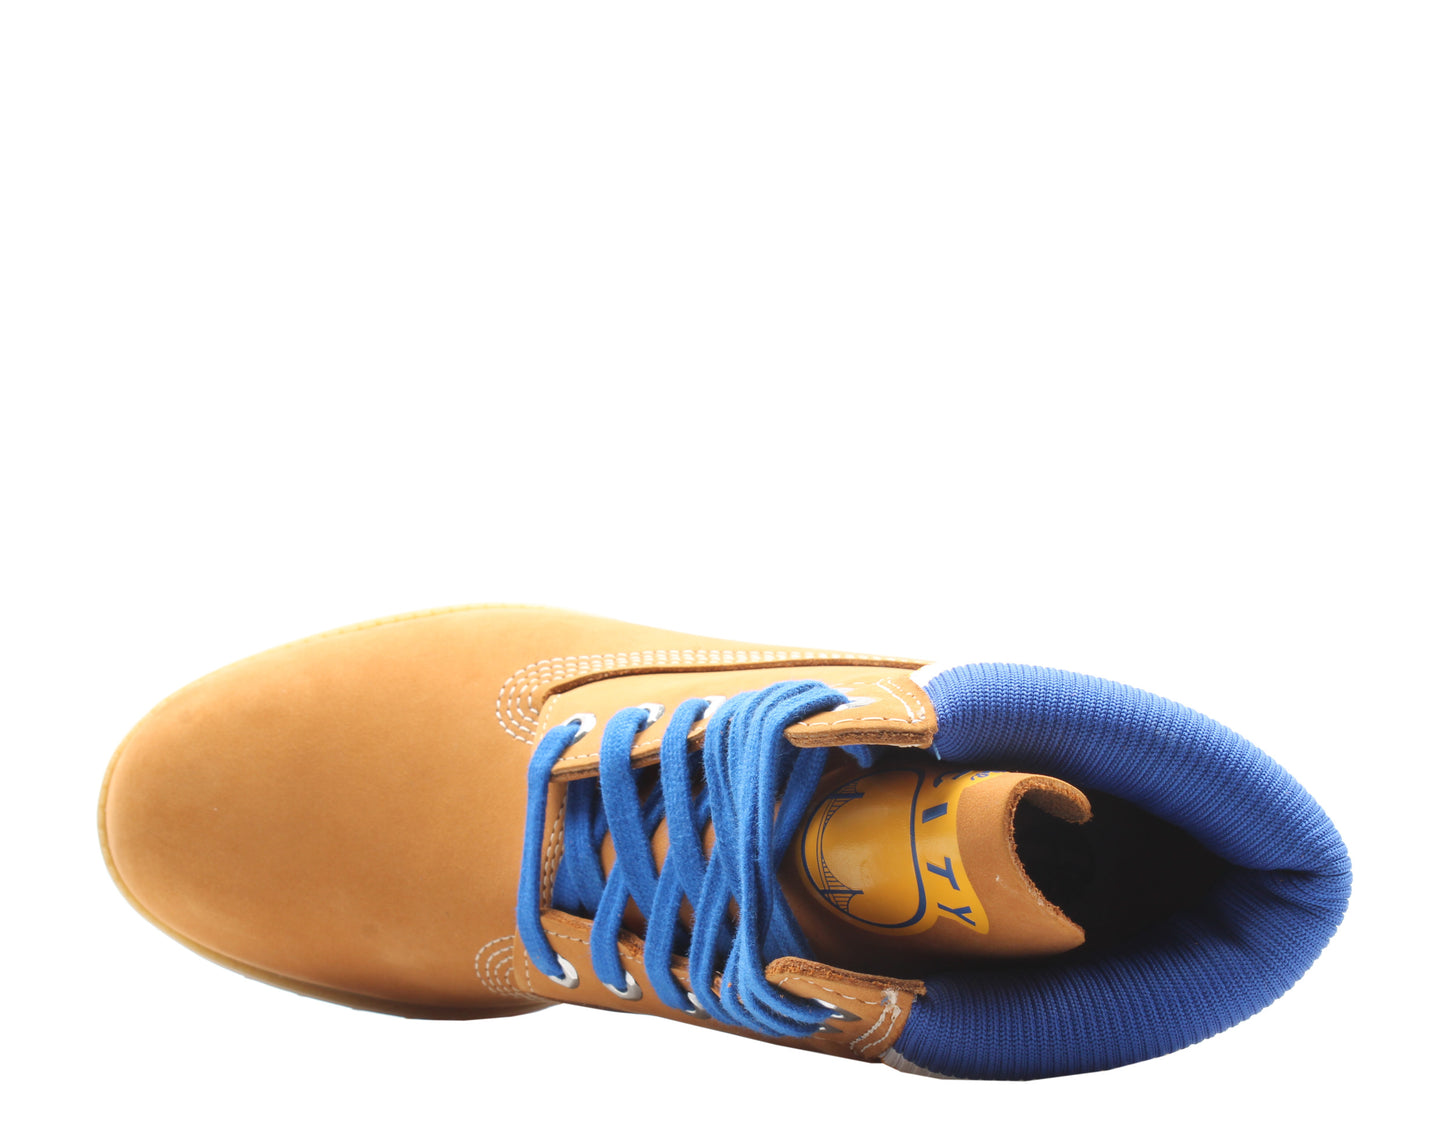 Timberland x Mitchell & Ness x NBA Golden State Warriors 6-Inch Premium Waterproof Men's Boots